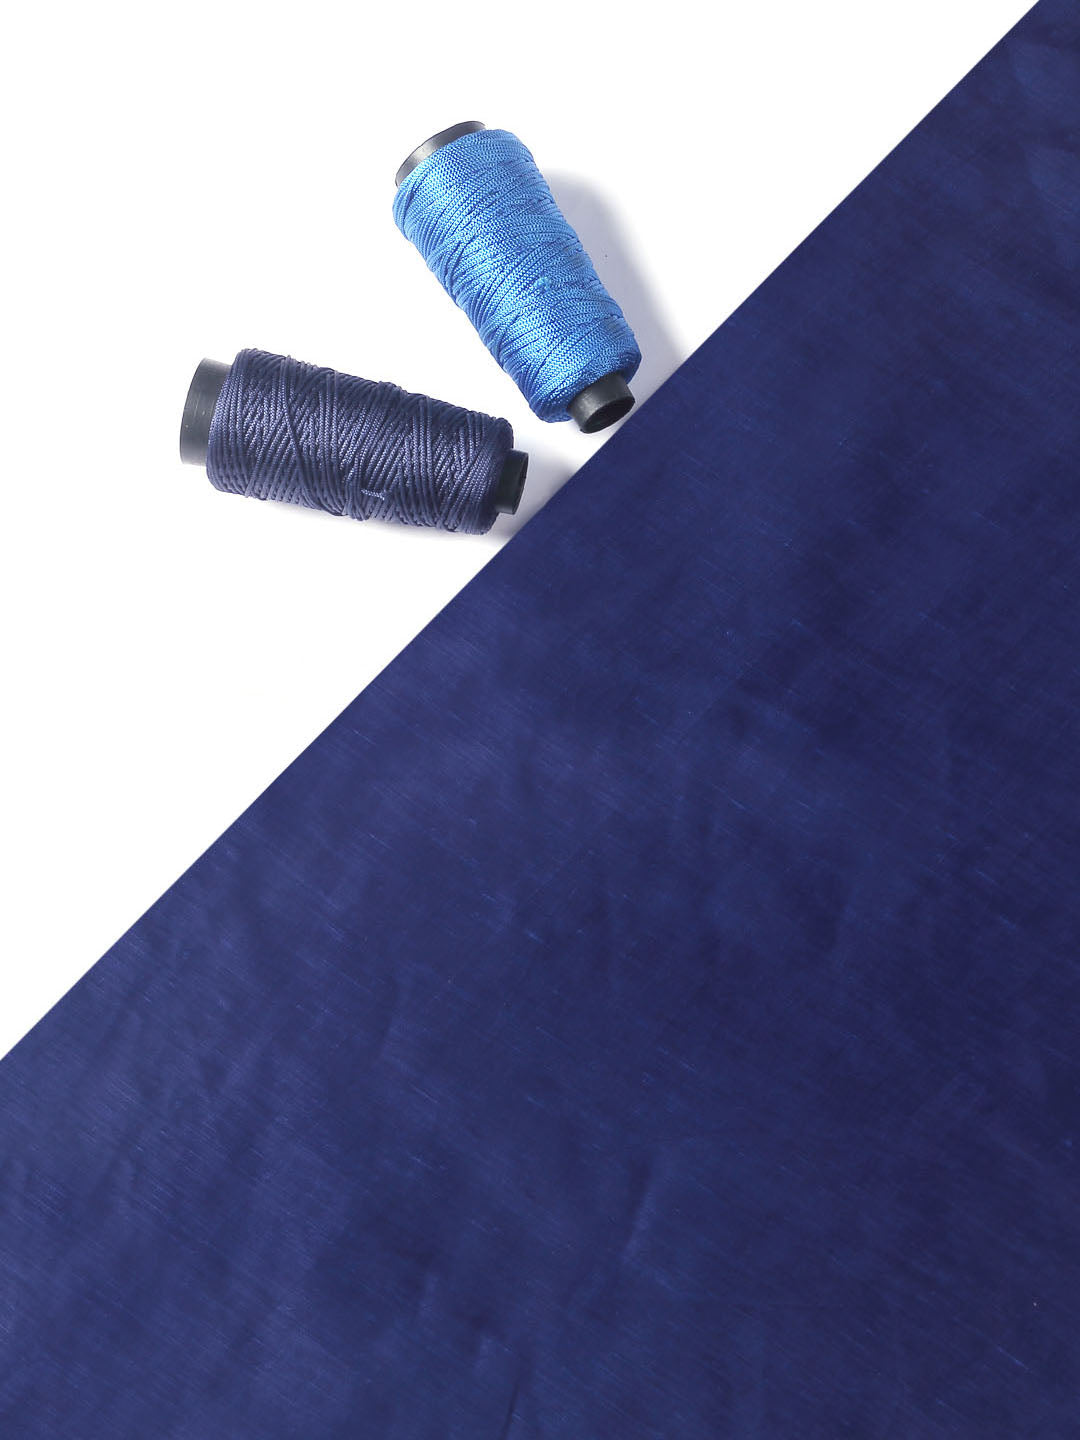 Navy Blue Linen Satin Fabric